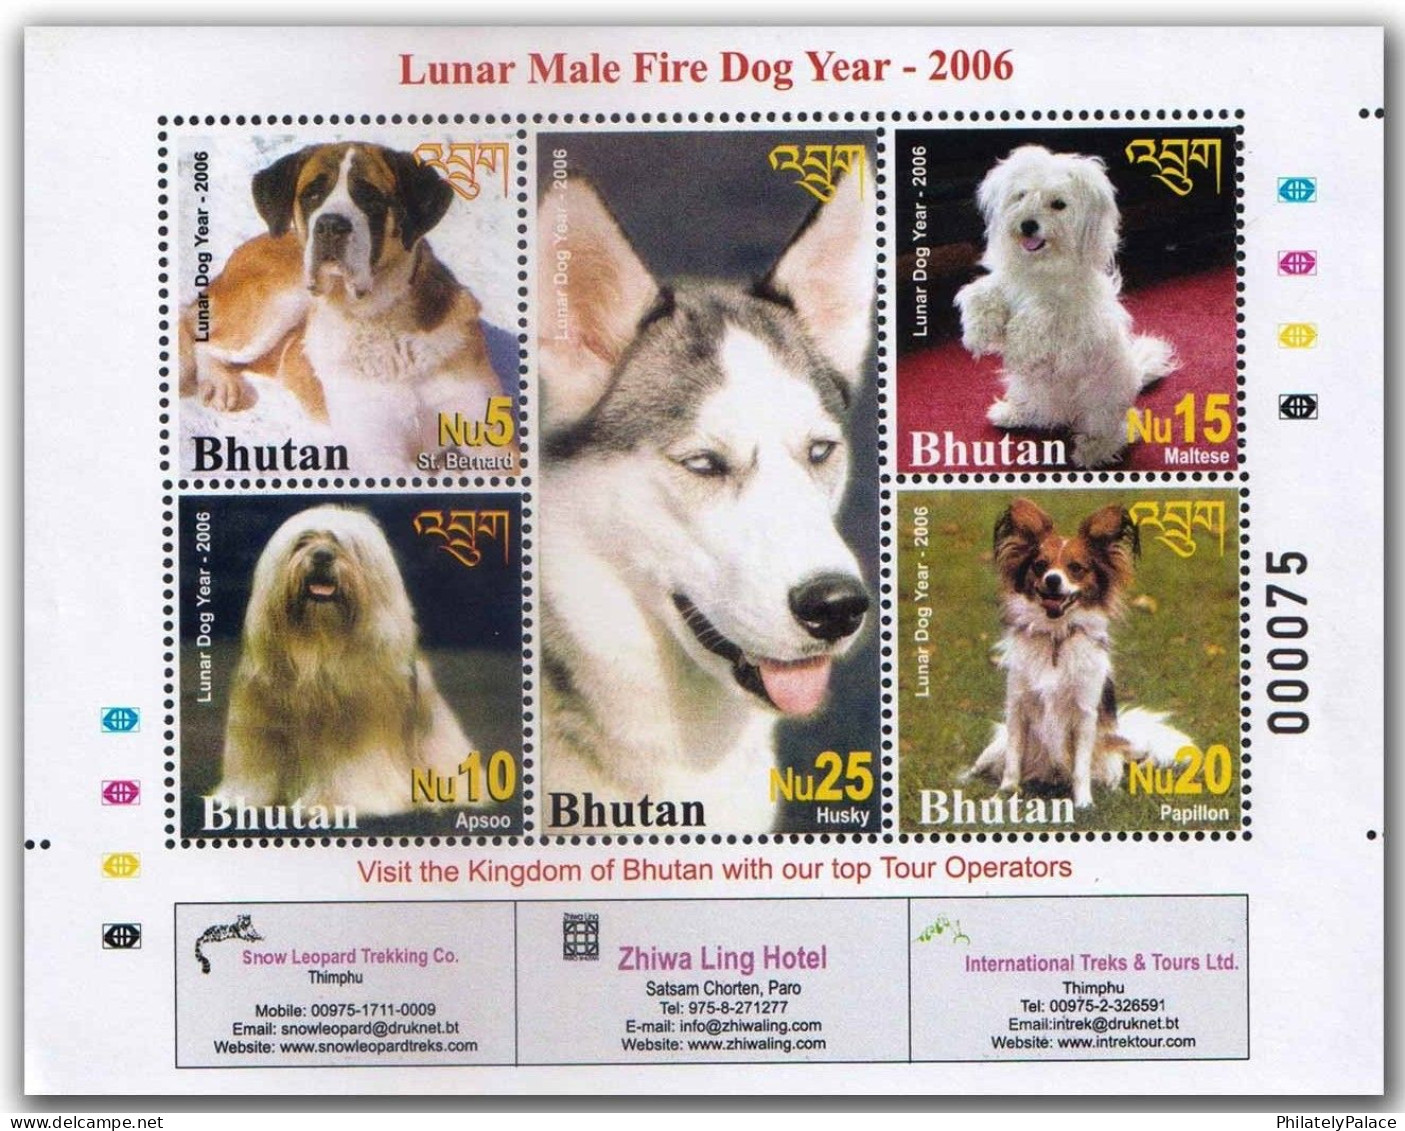 BHUTAN 2006 Lunar Male Fire Dog,Husky,Apsoo,Maltese,Papillon,St.Bernard,Animal,Sheetlet MNH (**) - Bhutan